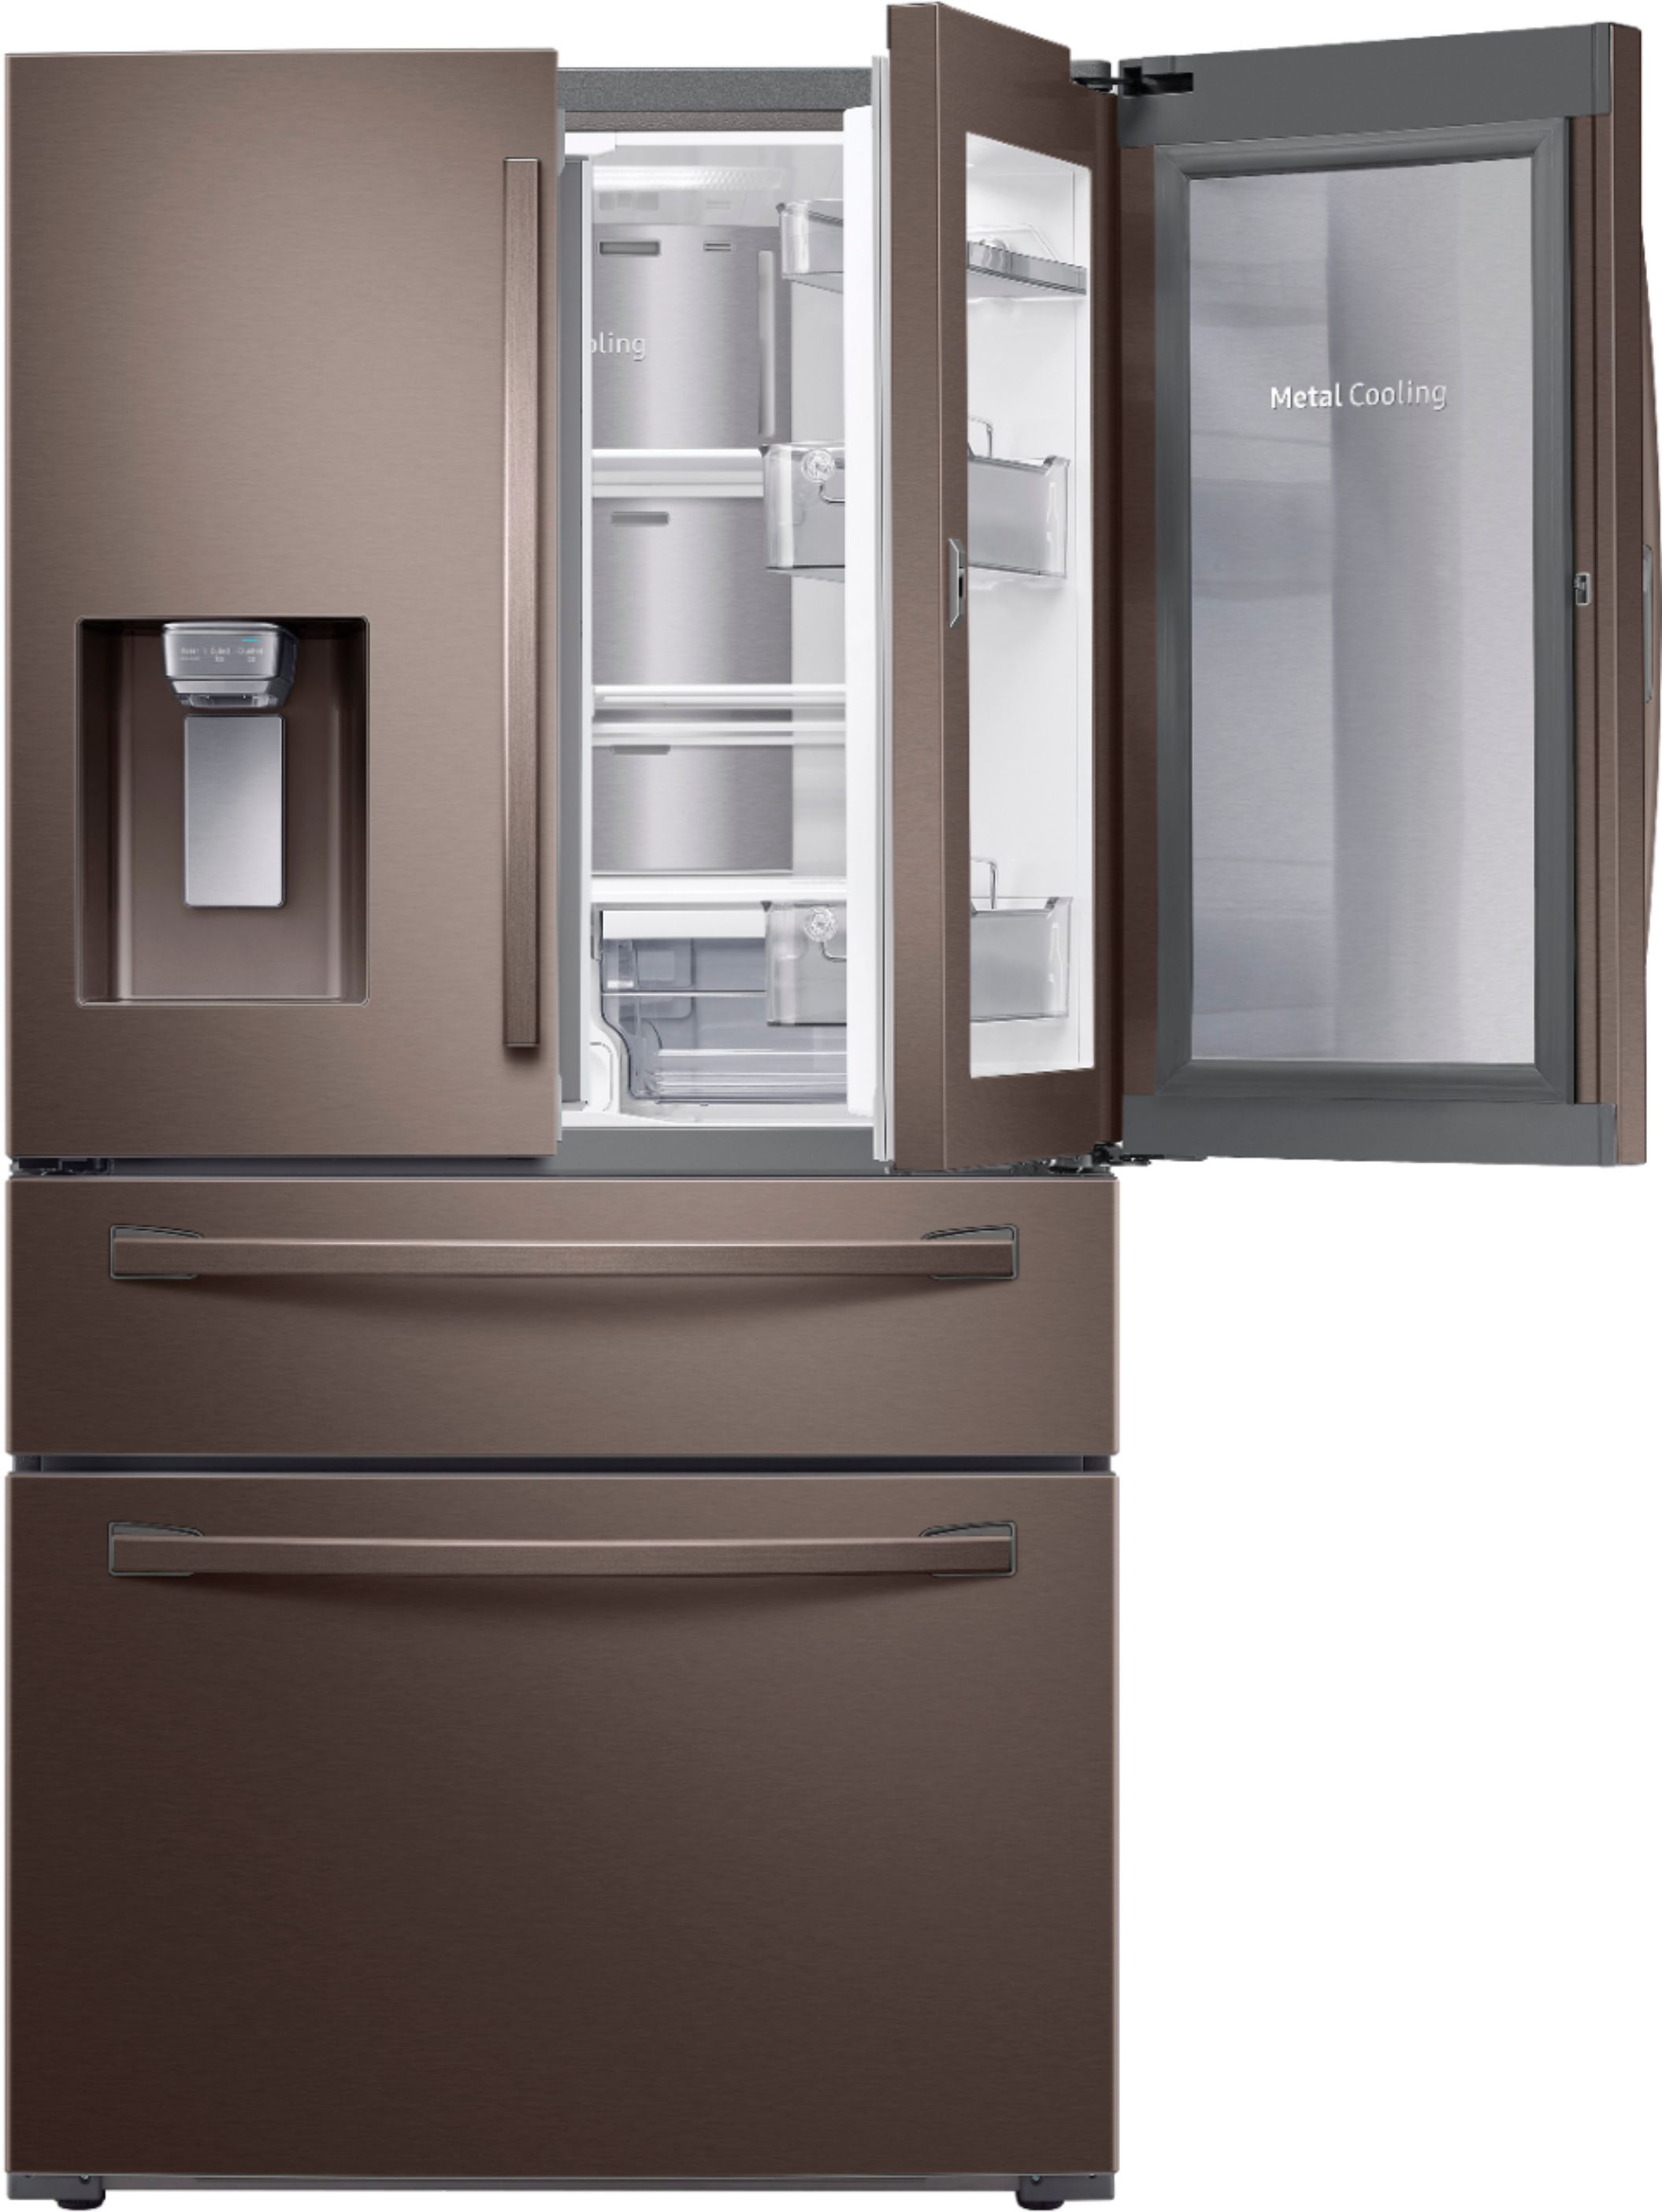 Samsung - 27.8 Cu. Ft. 4-Door French Door Refrigerator with Food Samsung Fridge Tuscan Stainless Steel